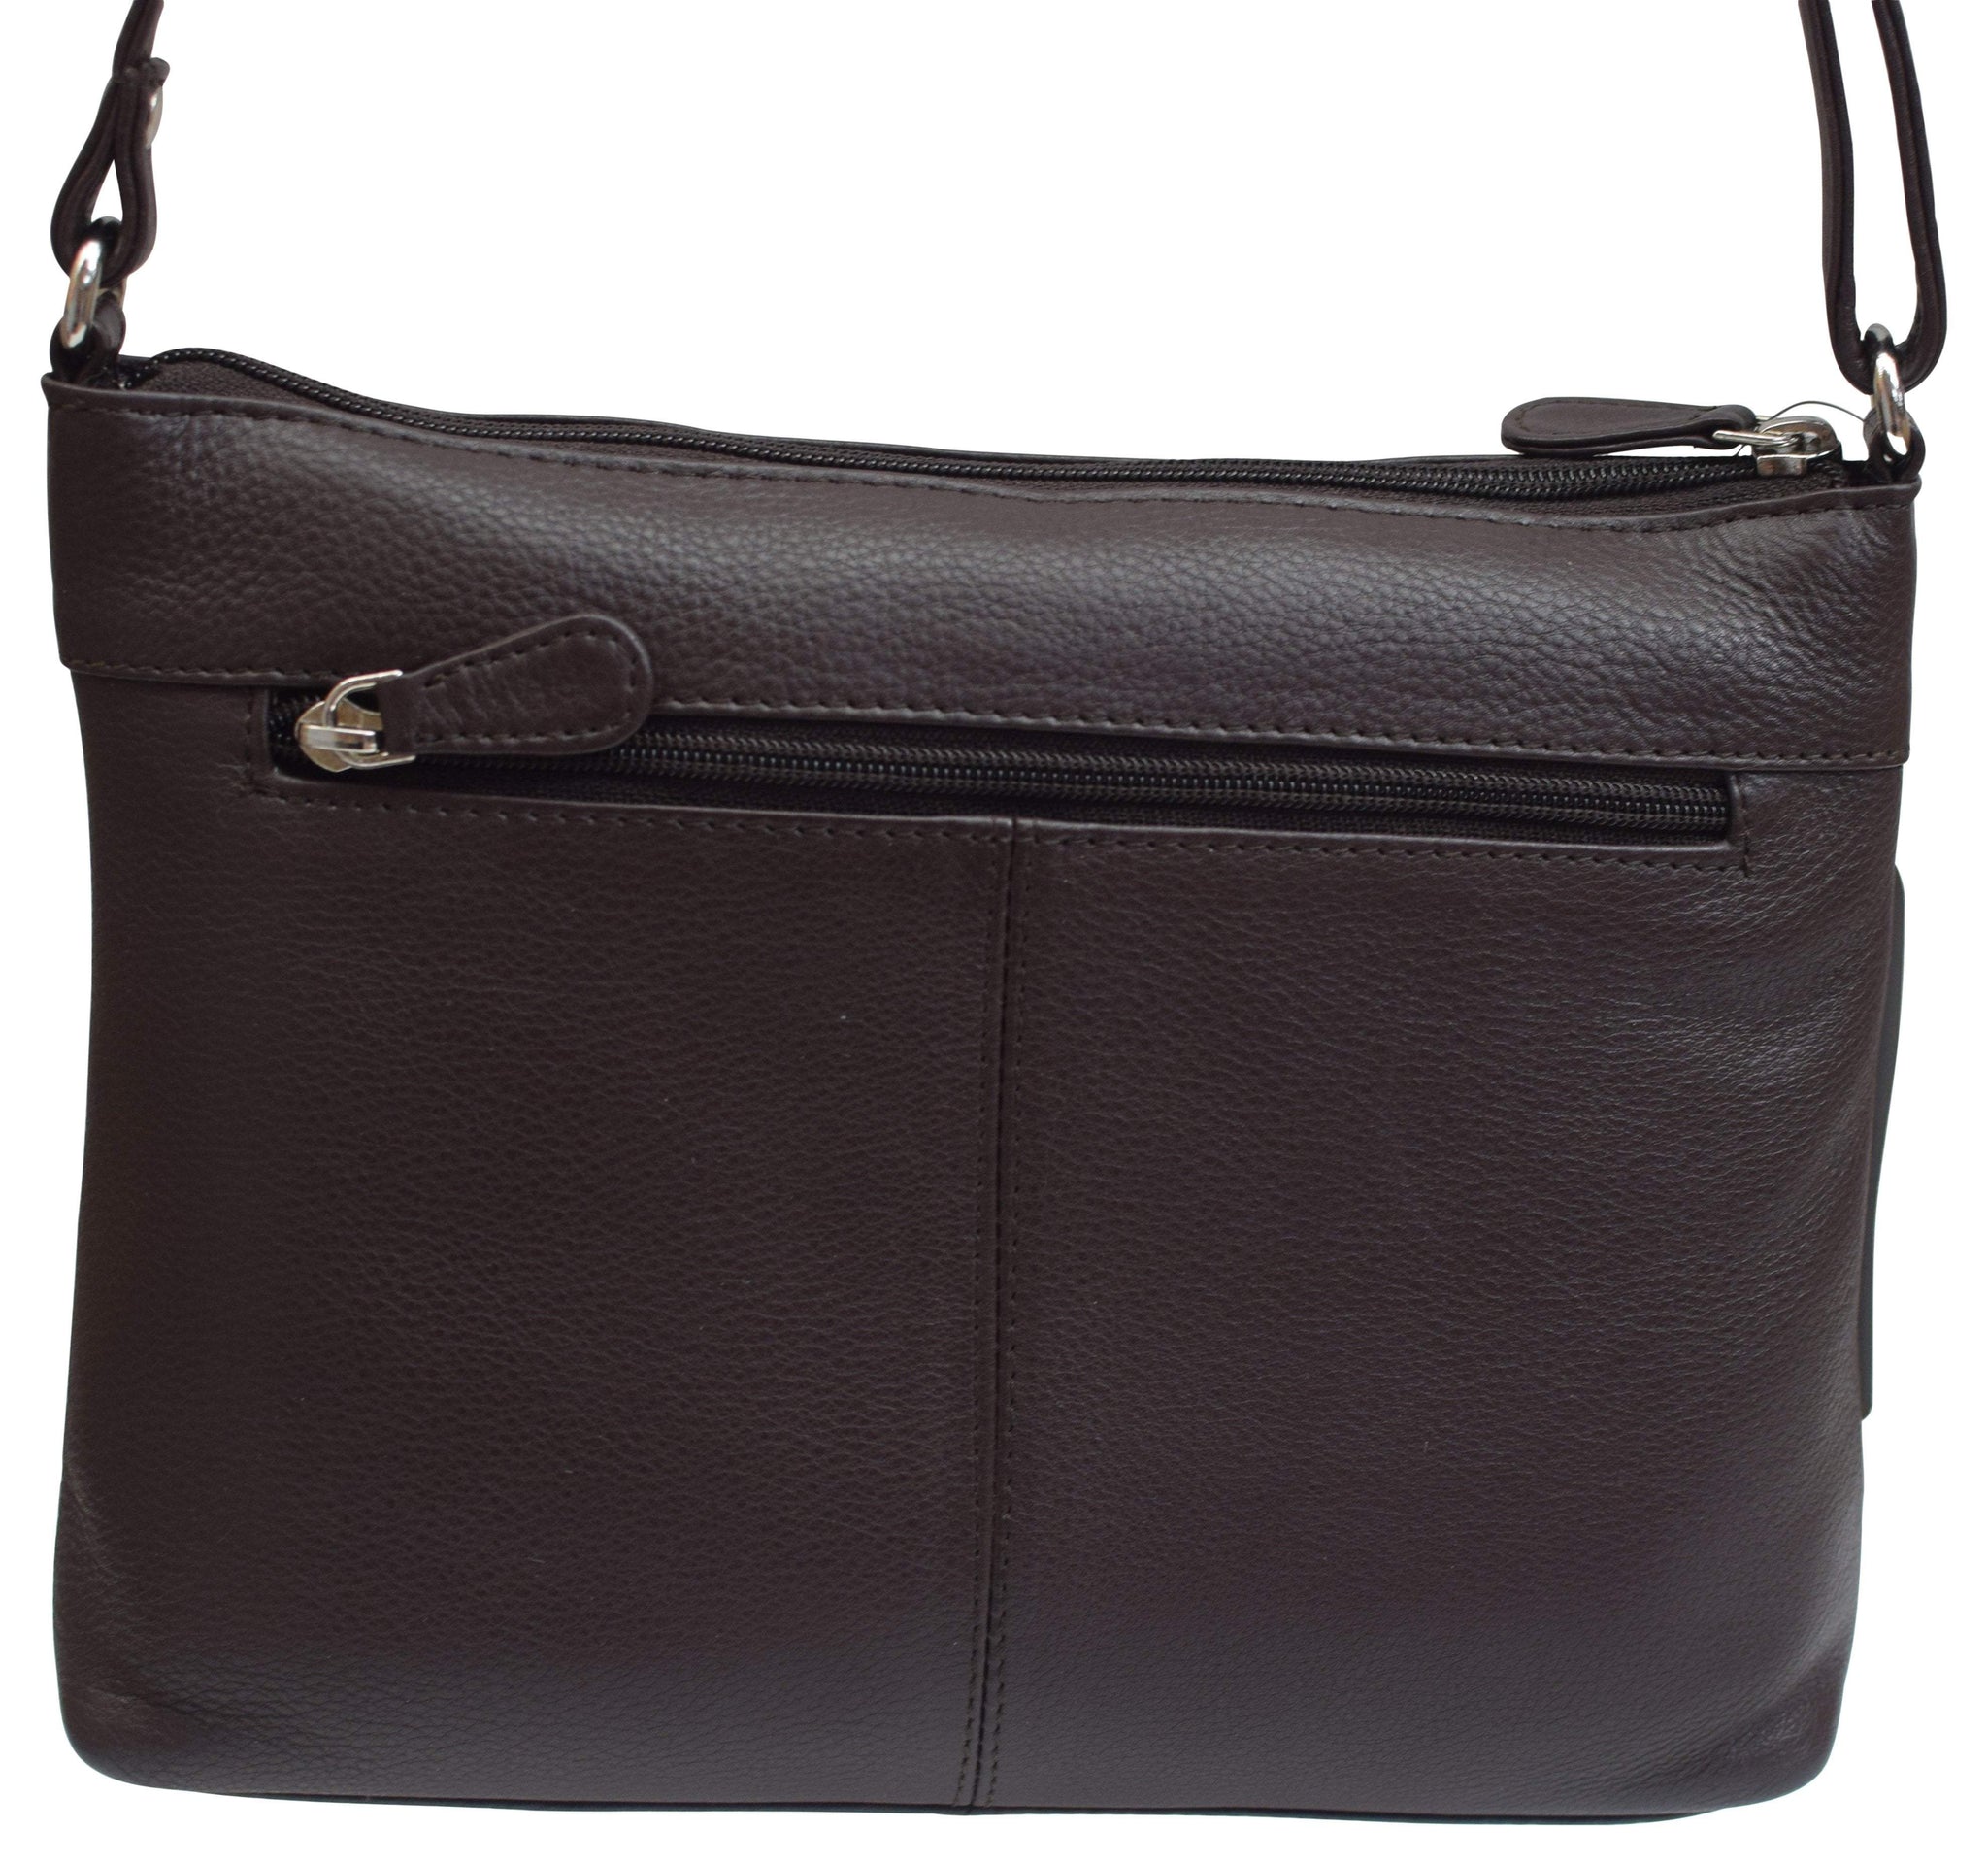 Fashion Handbags Women Bags Shoulder Messenger Bag Wedding Party Clutch Bag  Tote | eBay